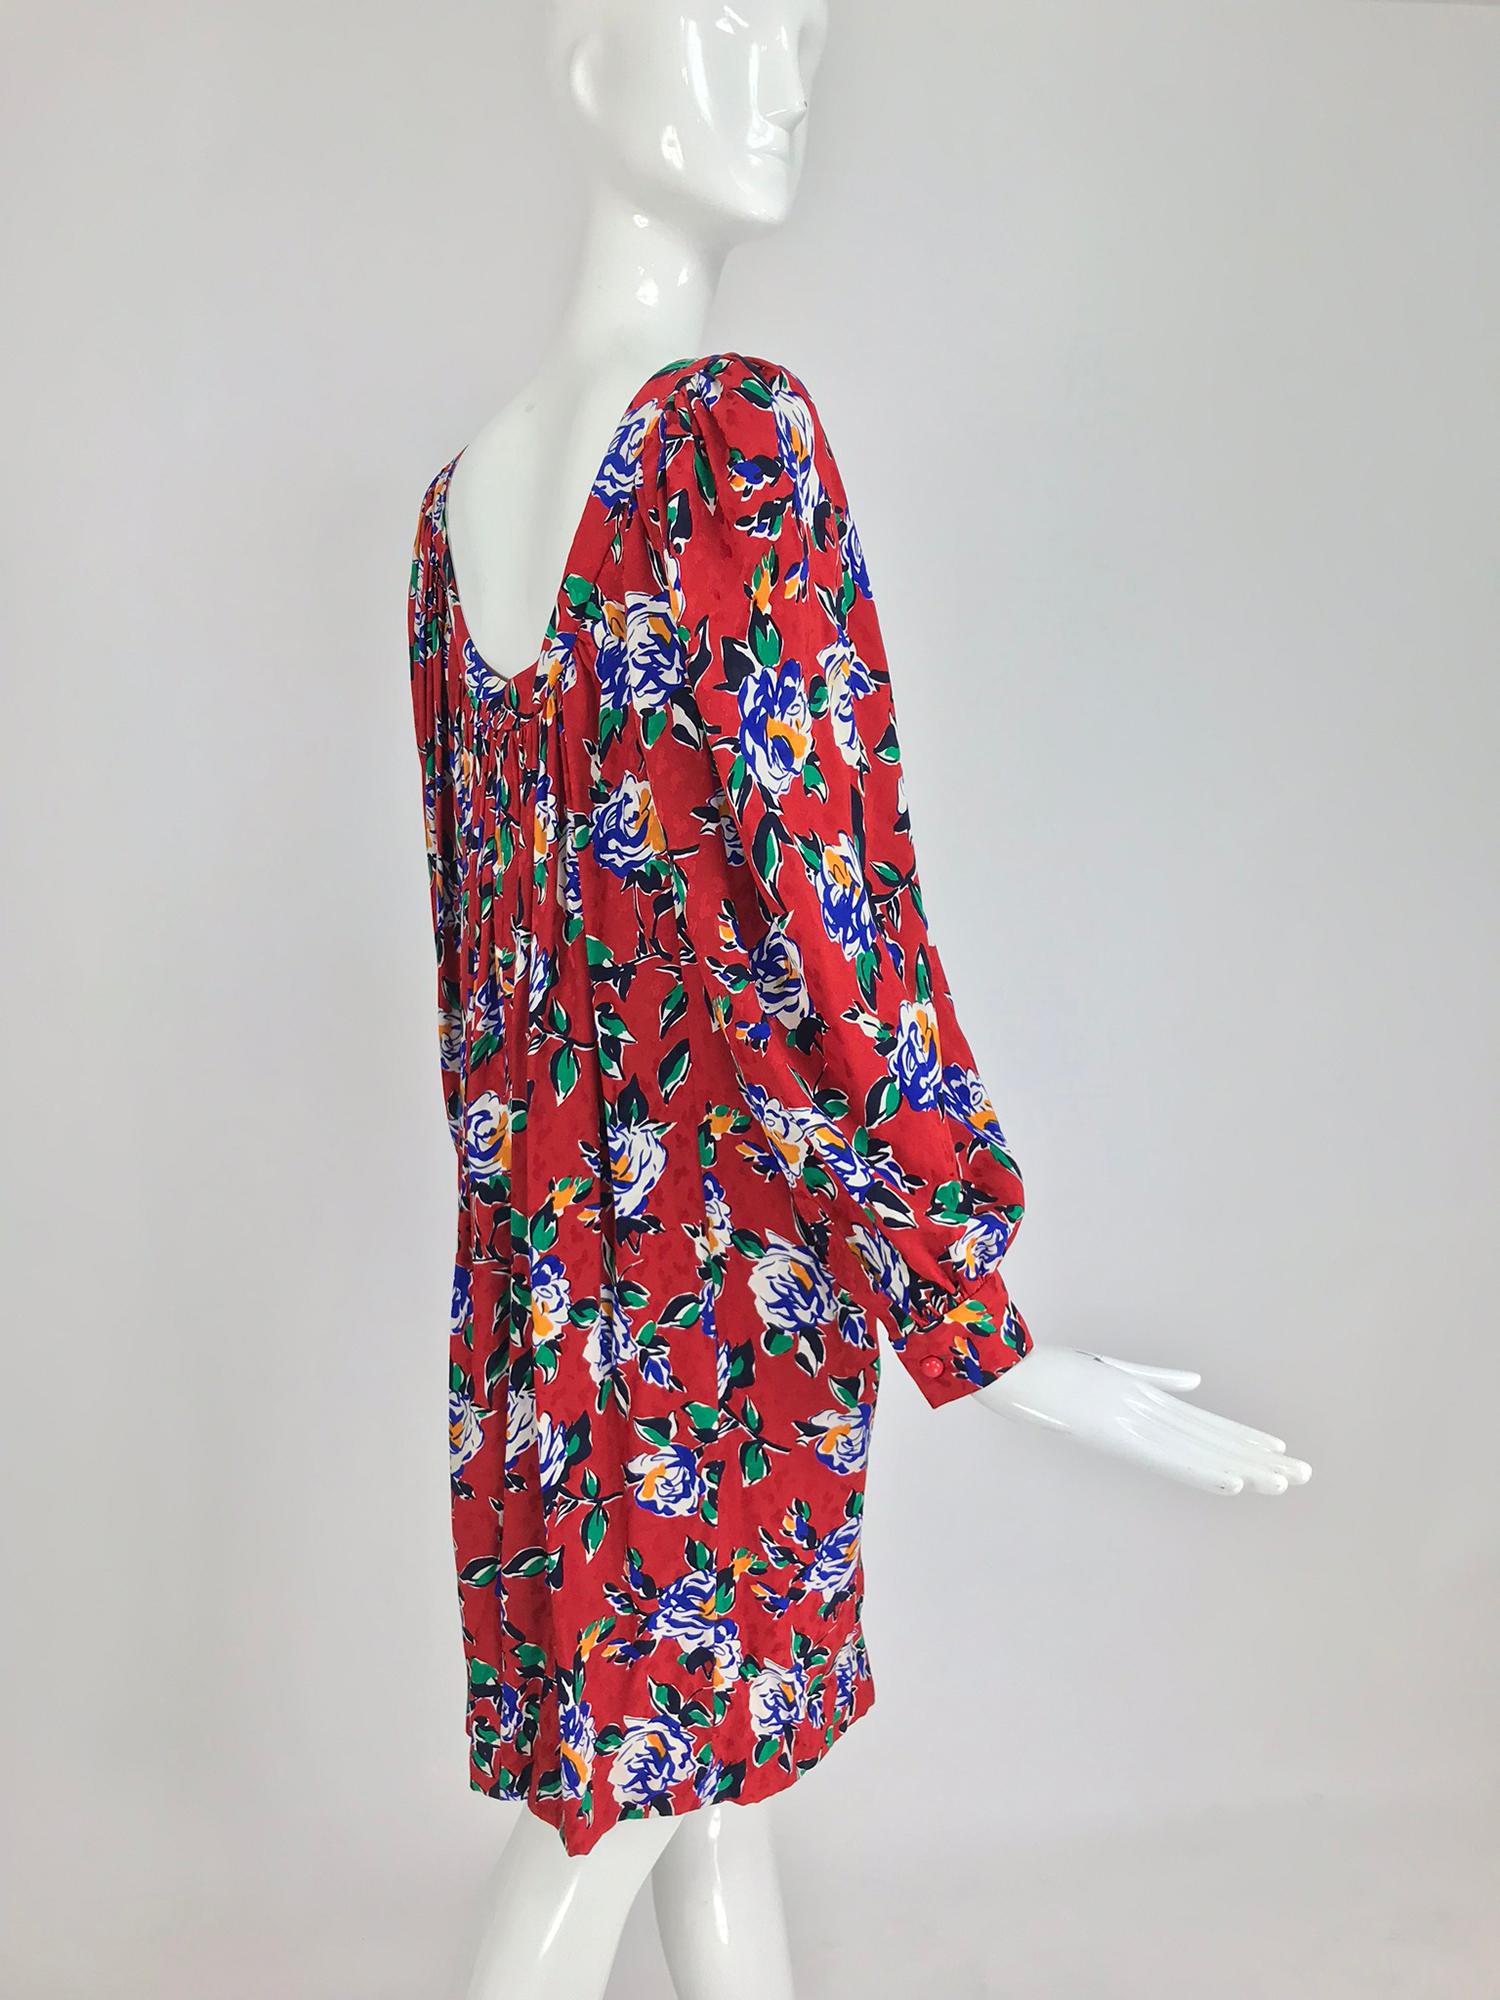 Yves Saint Laurent Red Floral Silk Jacquard Scoop Neck Dress 1990s 5